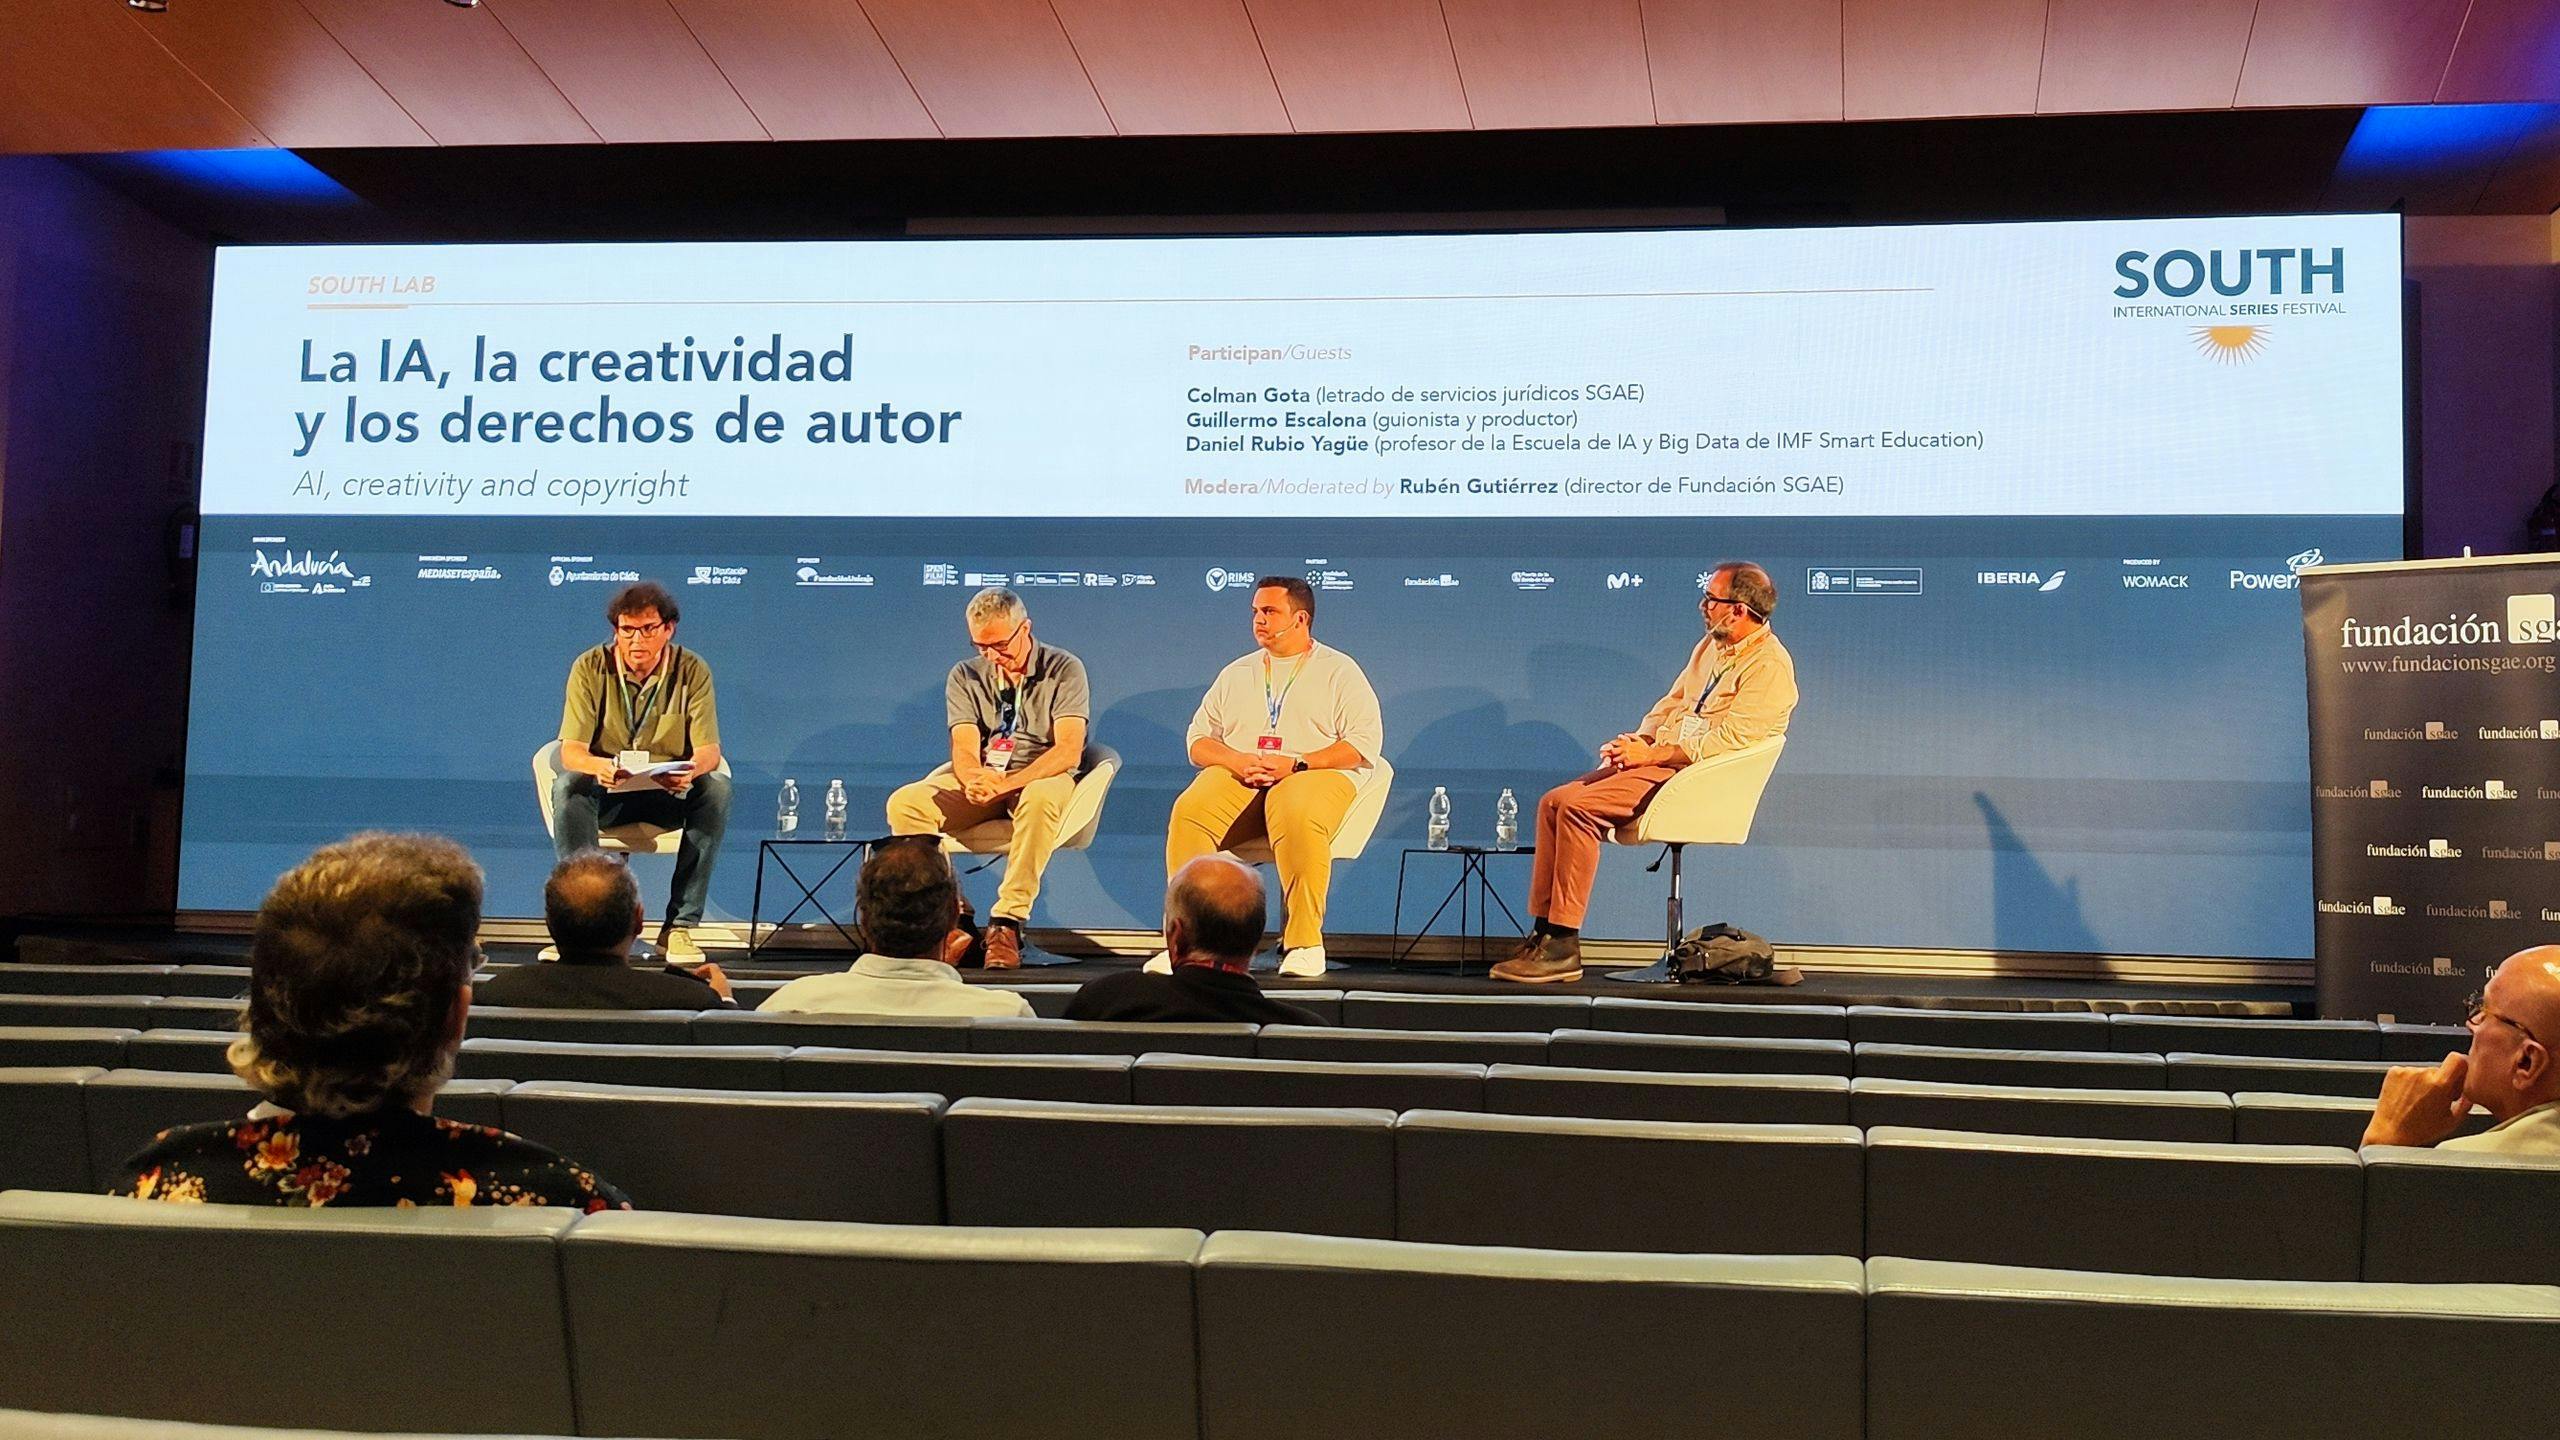 Rubén Gutiérrez, Colman Gota, Daniel Rubio Yagüe y Guillermo Escalona en el South International Series Festival